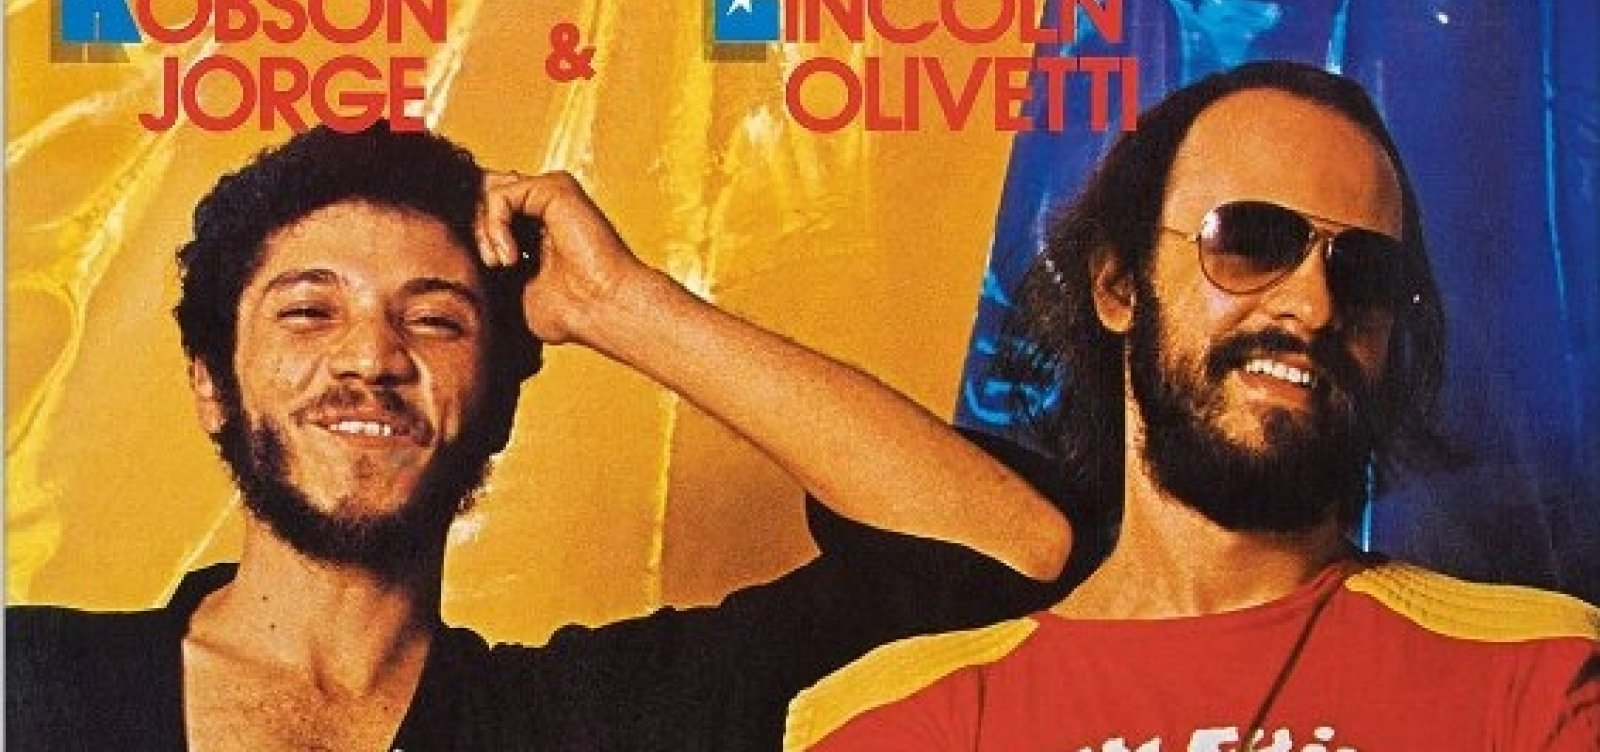 Robson Jorge & Lincoln Olivetti: uma aula de música pop